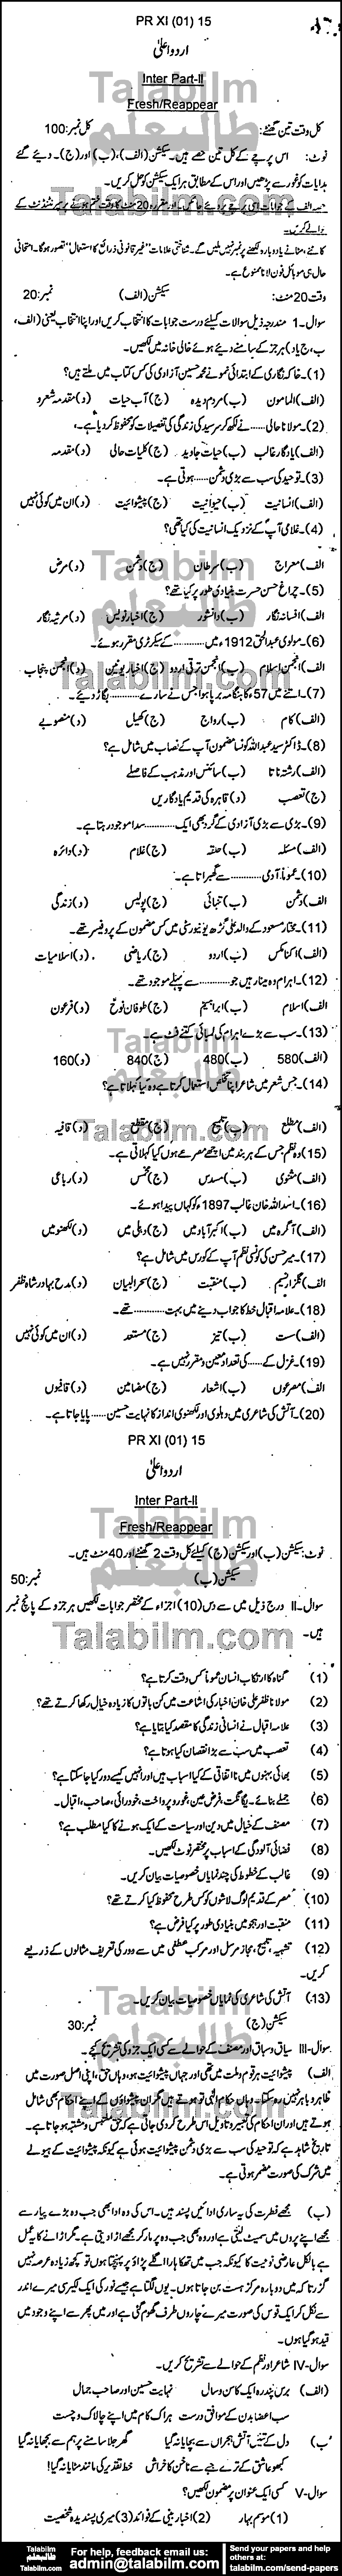 Urdu 0 past paper for Group-I 2015